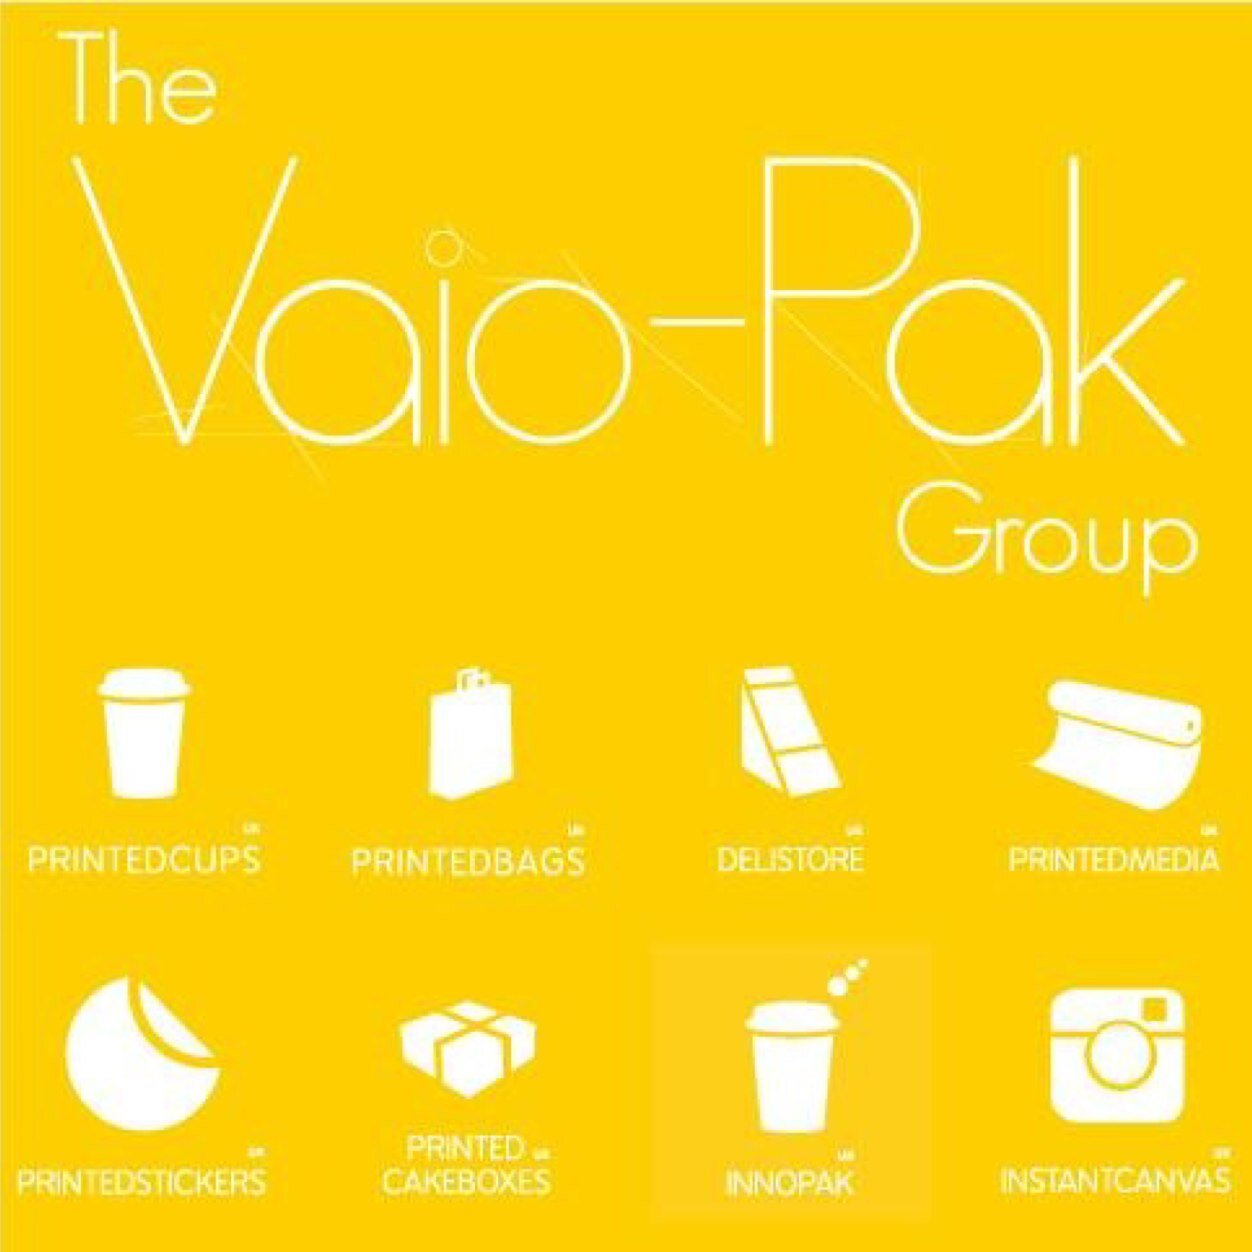 The VaioPak Group is an established group of companies consisting of Printed Cups UK, Printed Bags UK, Deli Store, Juice Bottles UK and Printed Media UK